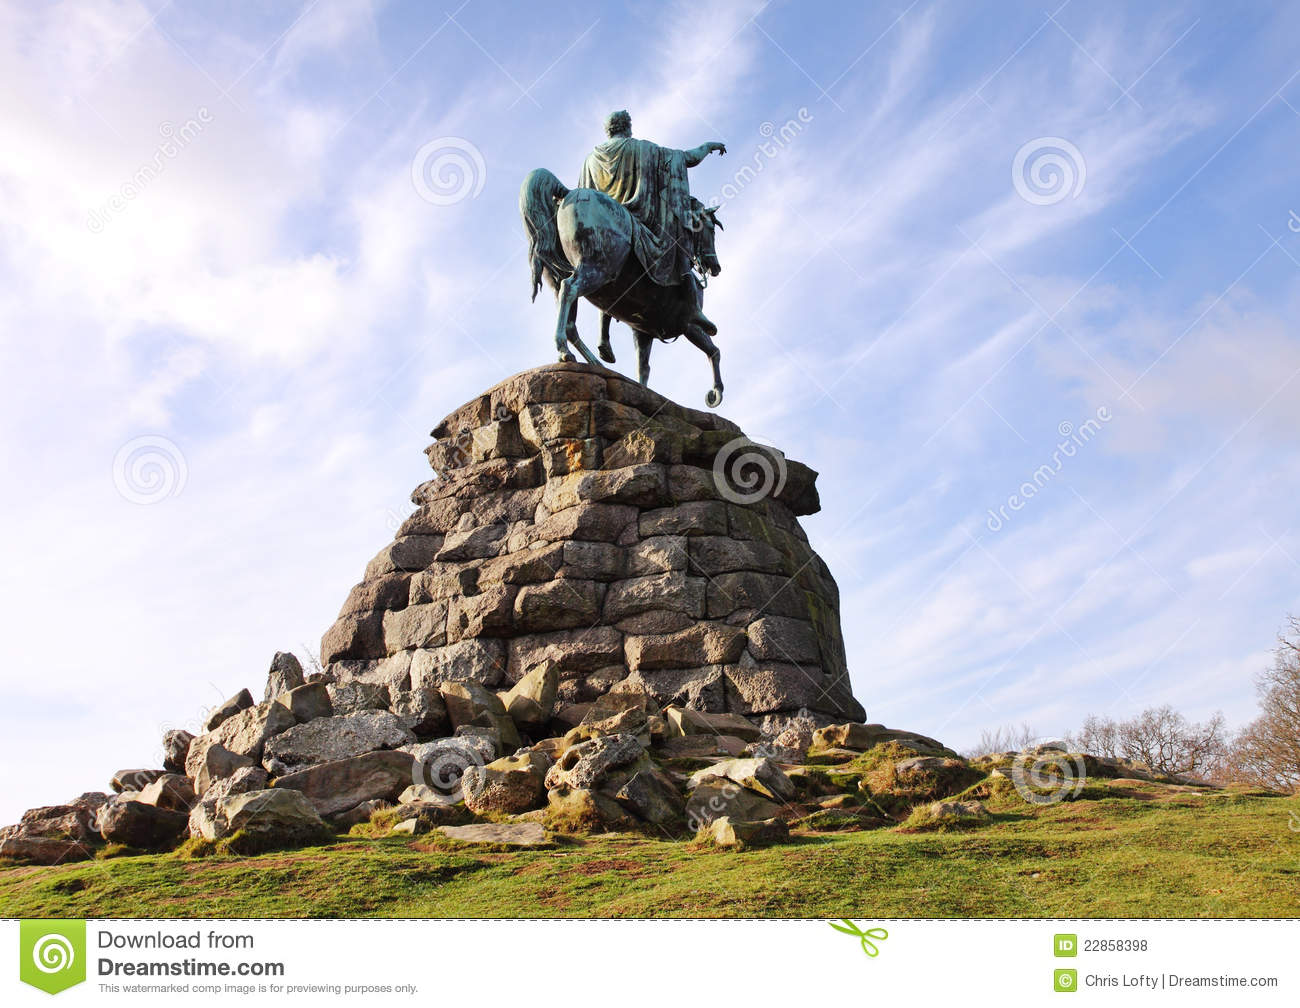 Statue Of King George Iii On Horseback In Royal Windsor Great Park In